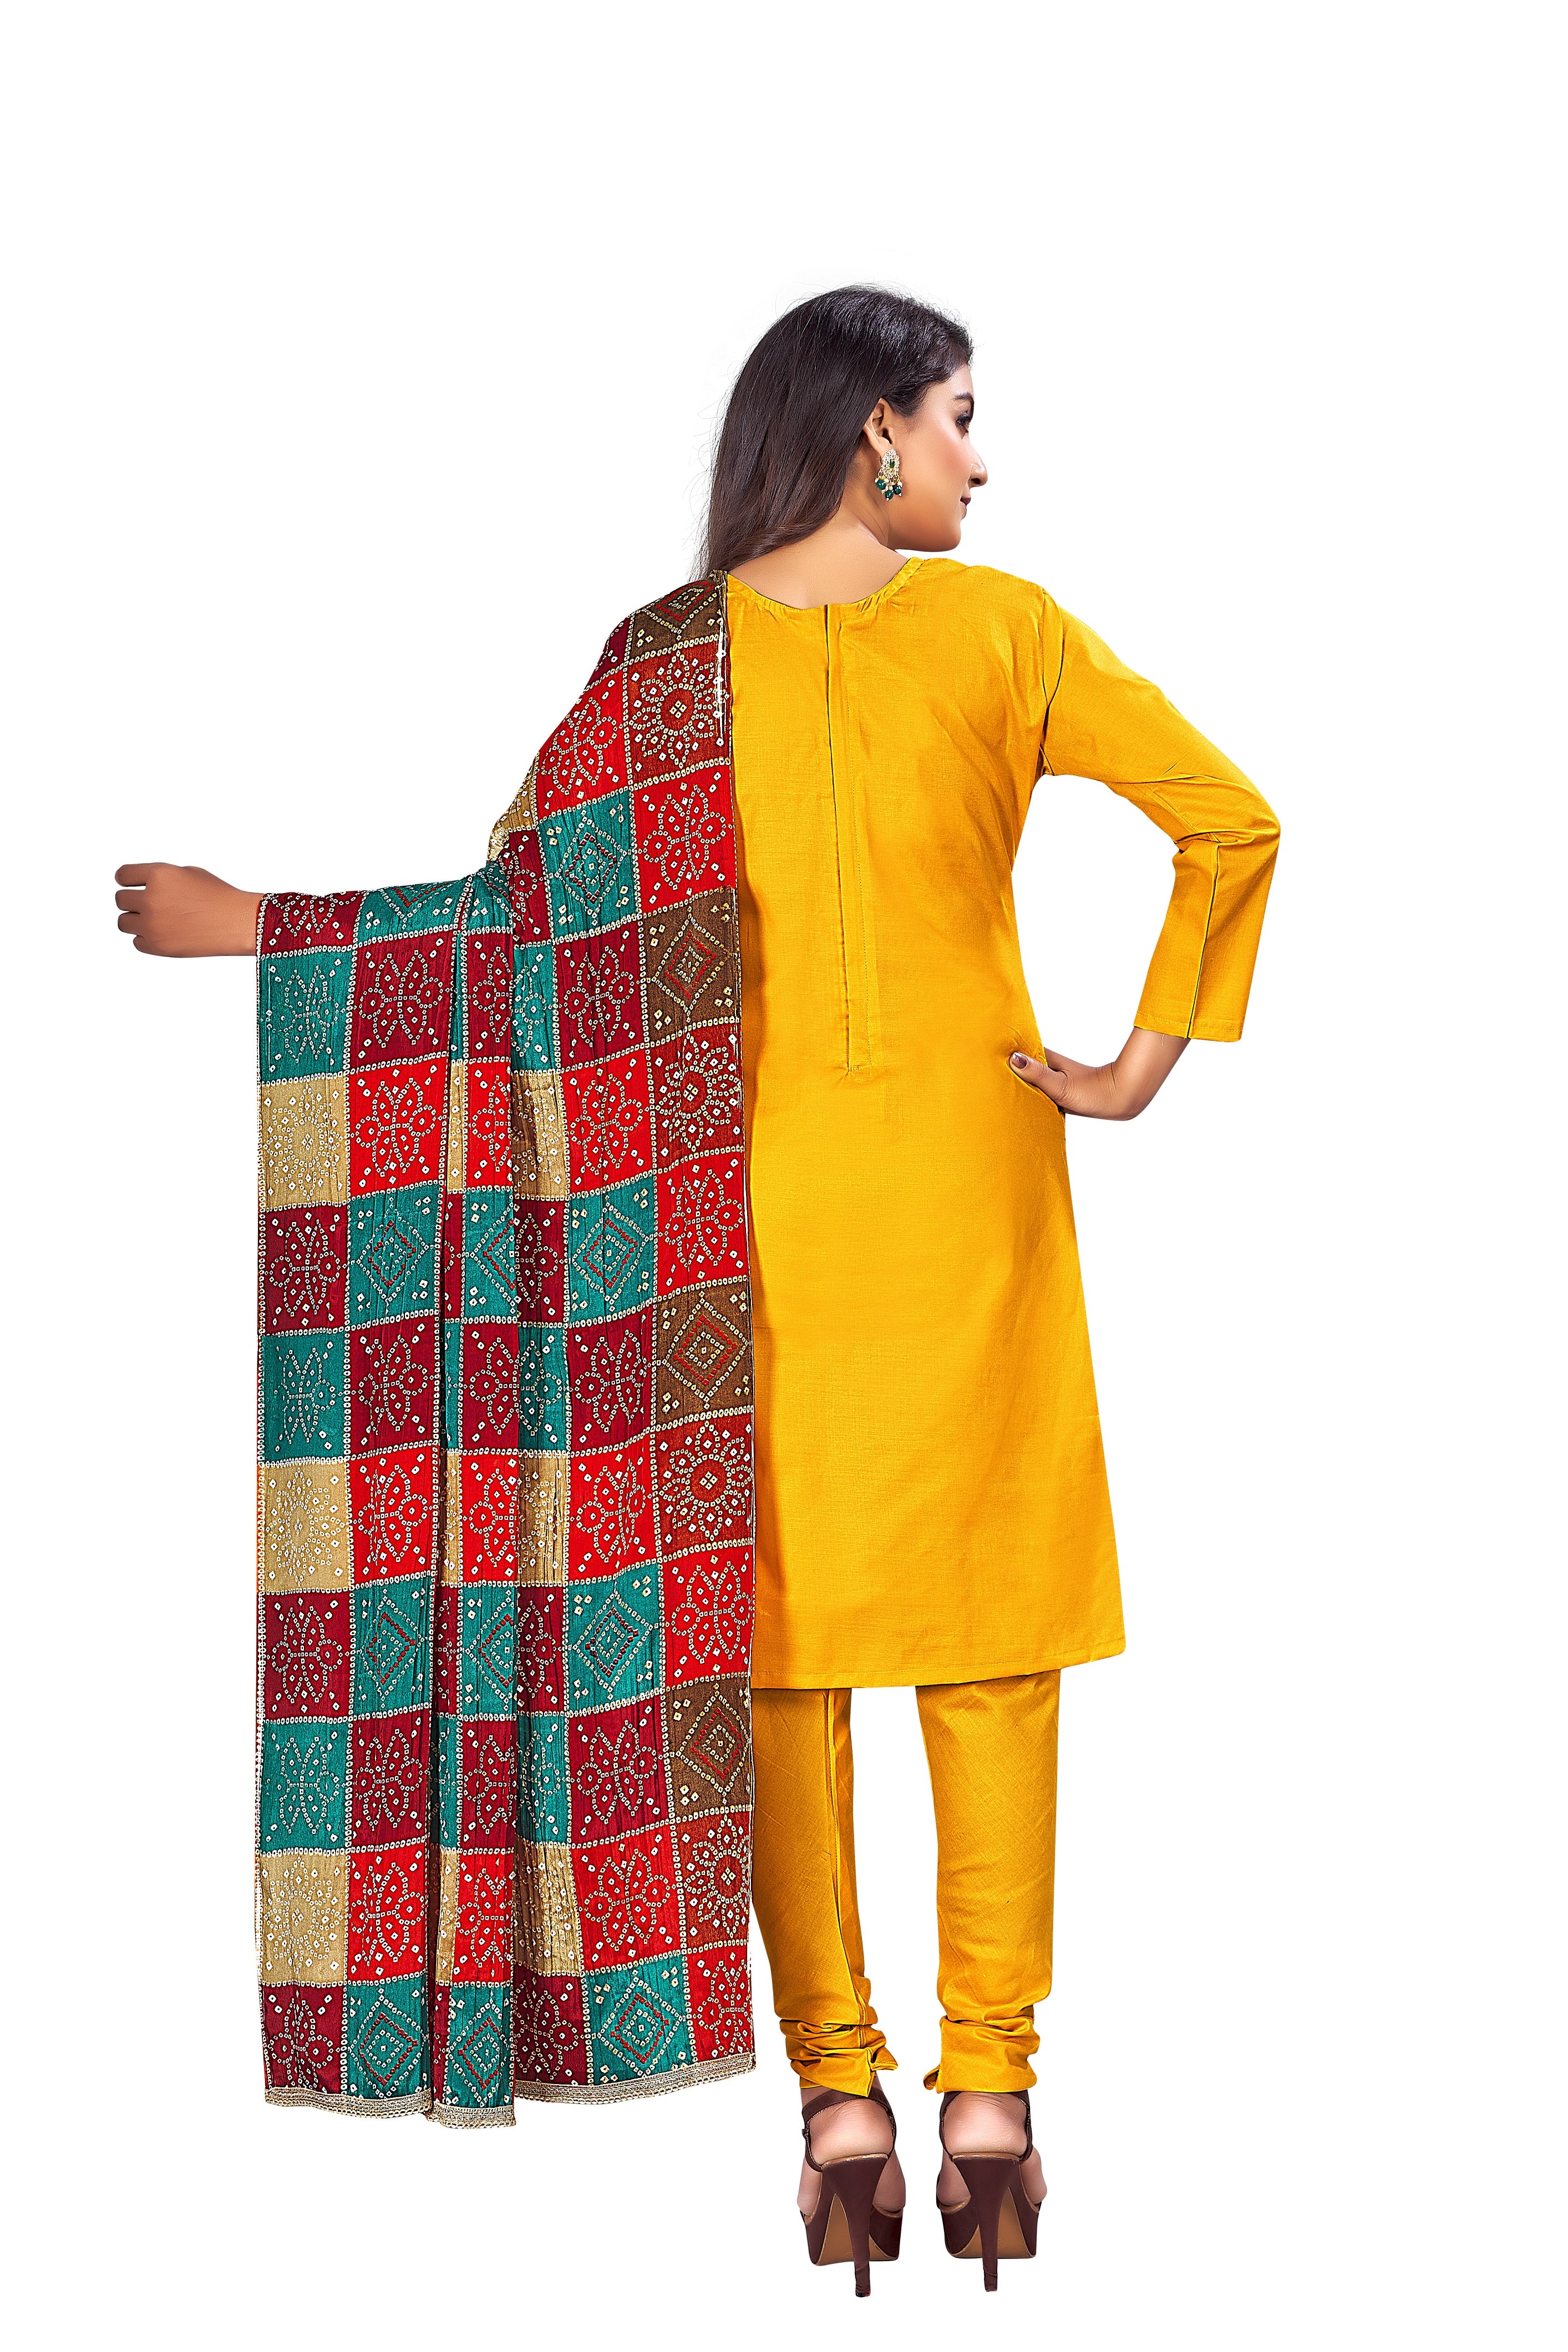 Women's Yellow Colour Semi-Stitched Suit Sets - Dwija Fashion